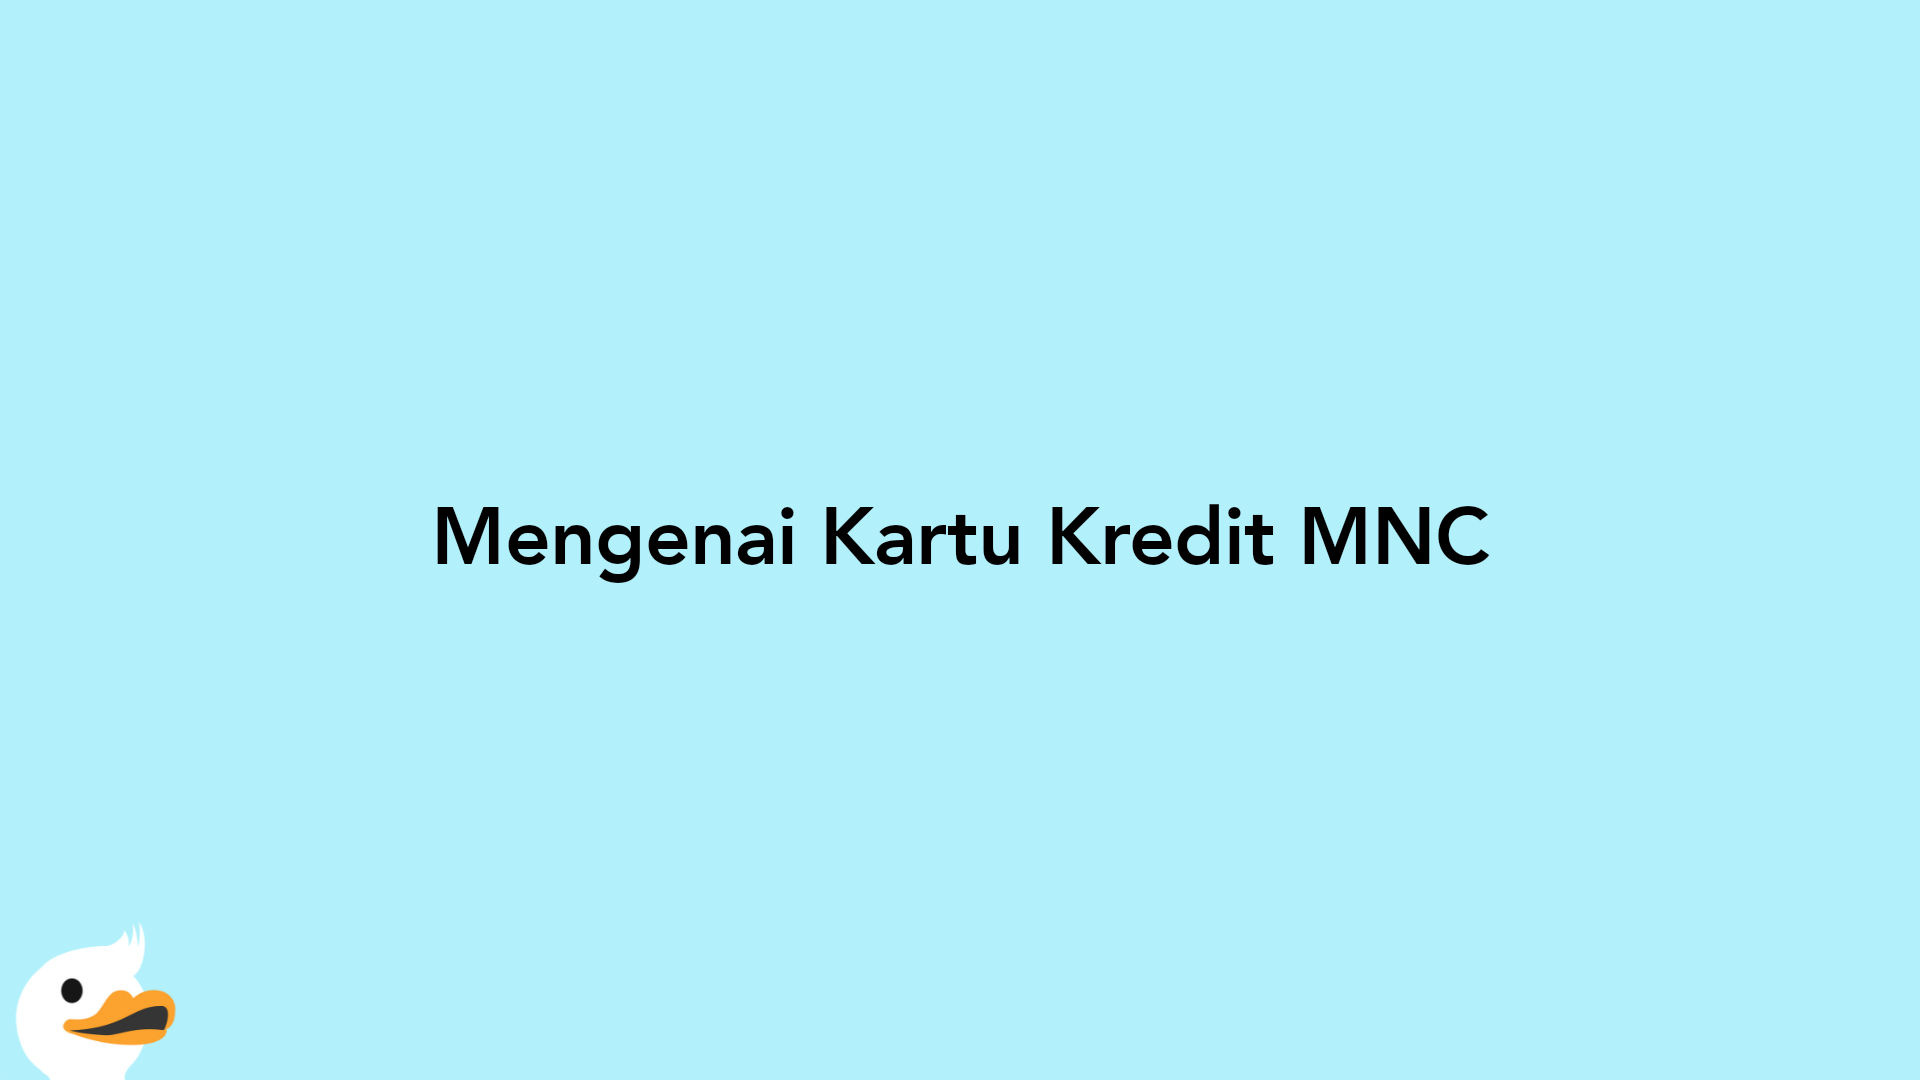 Mengenai Kartu Kredit MNC